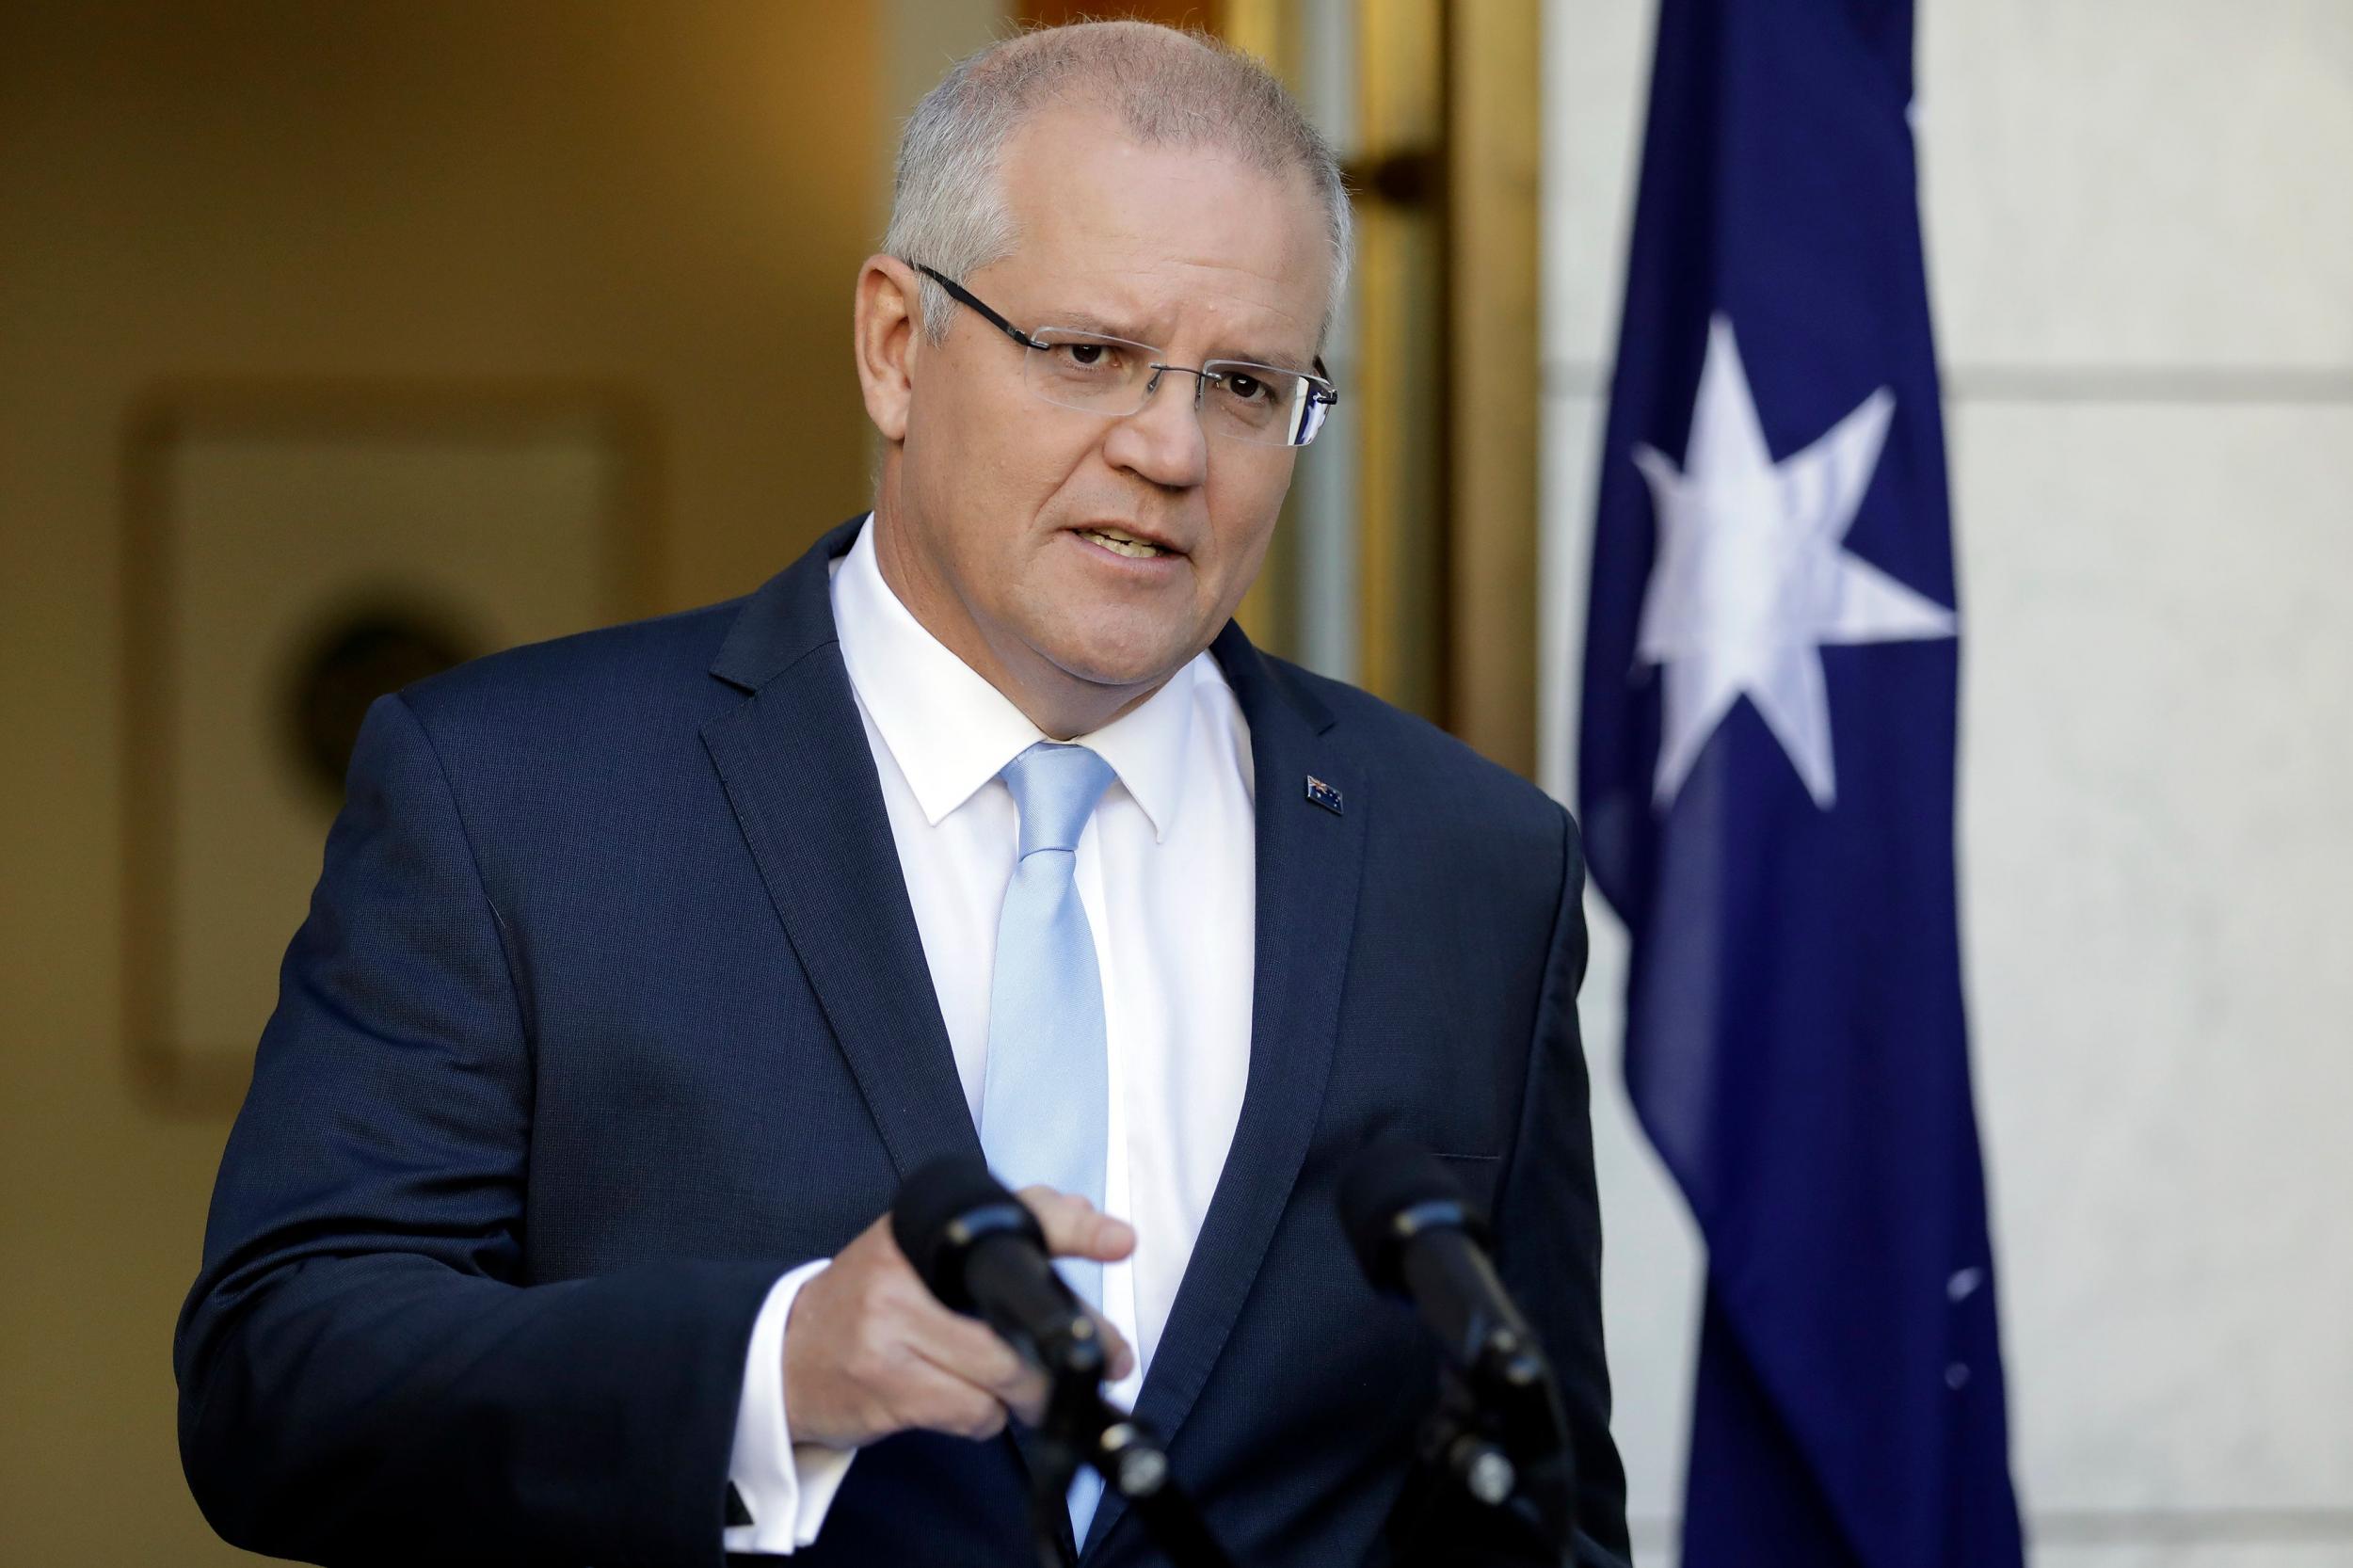 Australian Prime Minister Scott Morrison criticised Israel Folau for his comments